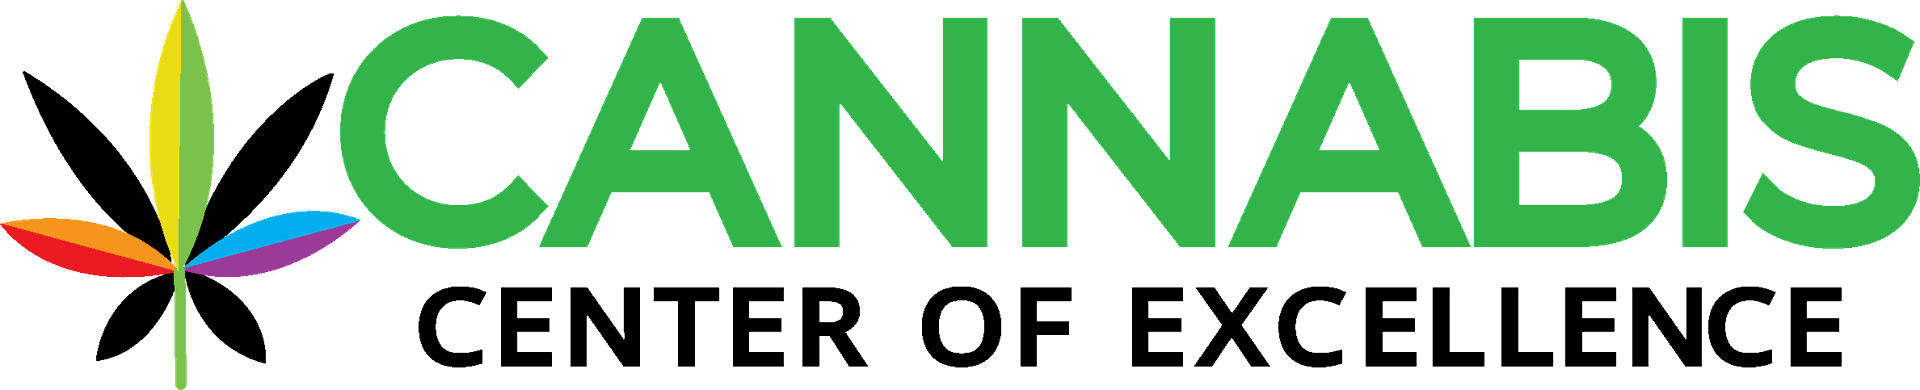 Cannabis Center of Excellence Logo Header Image